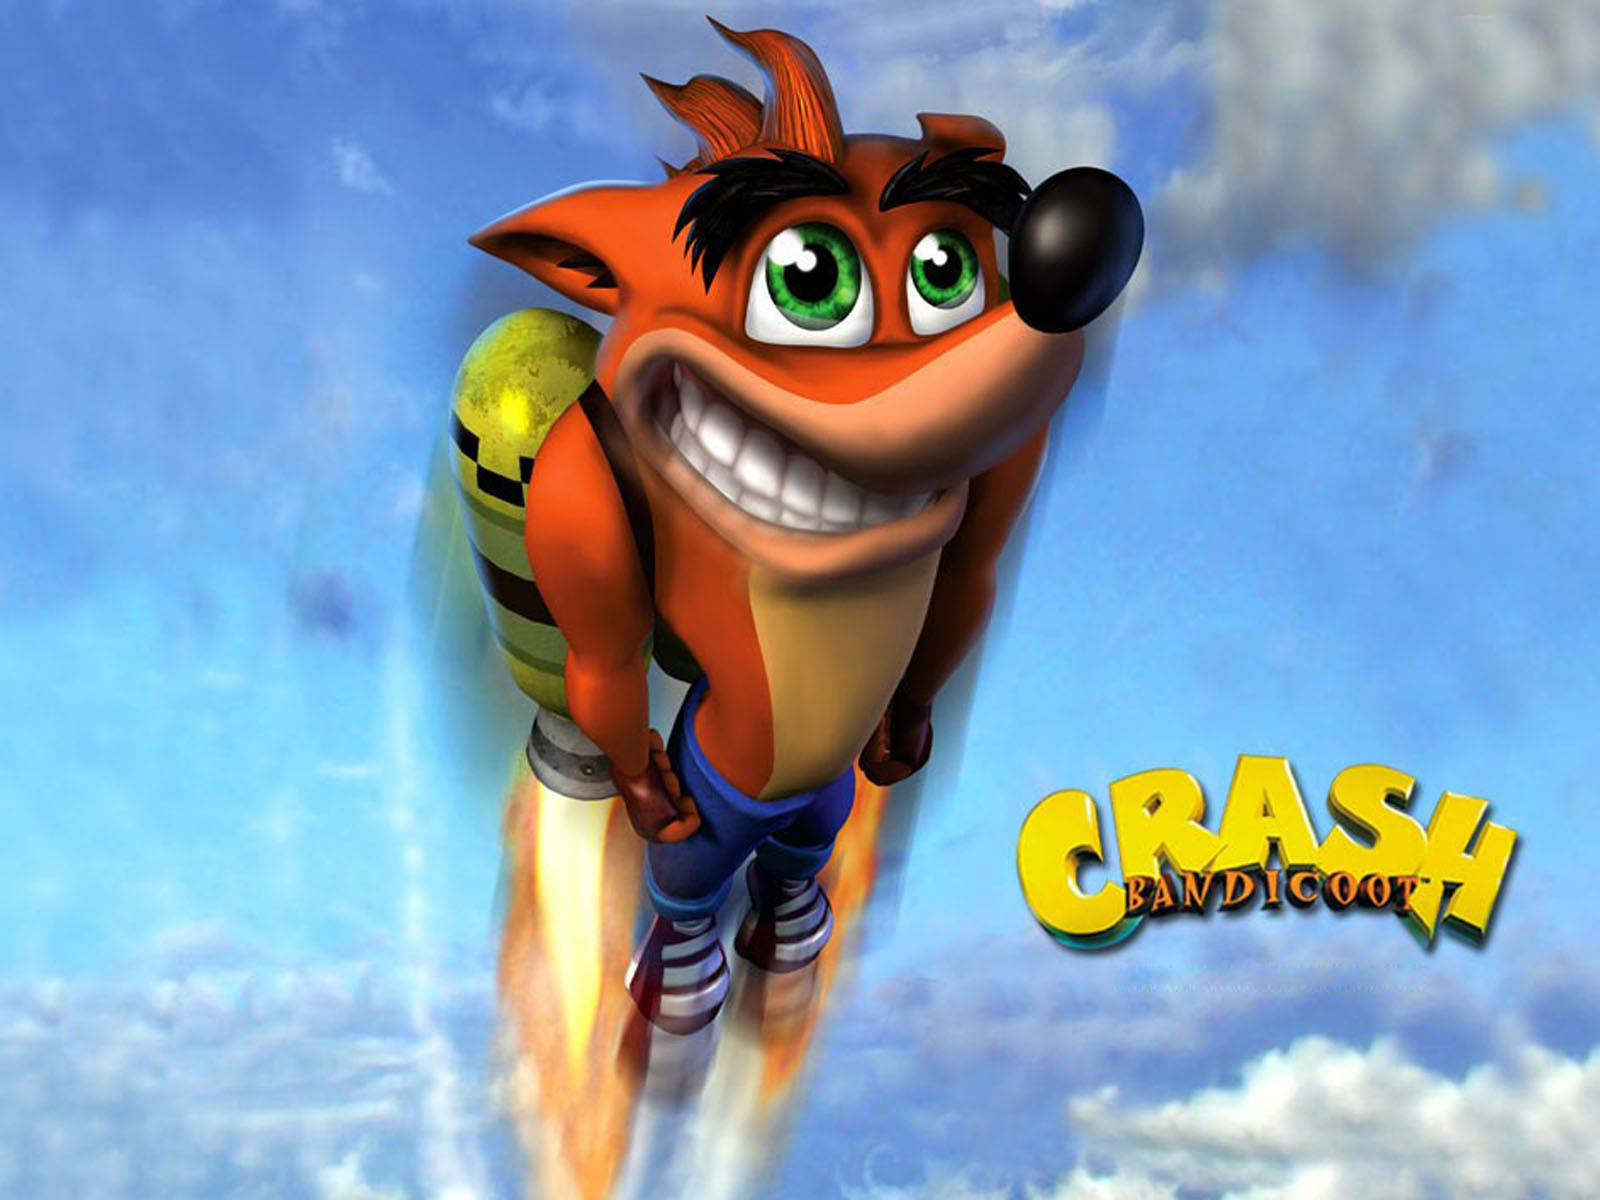 Crash bandicoot free download on pc